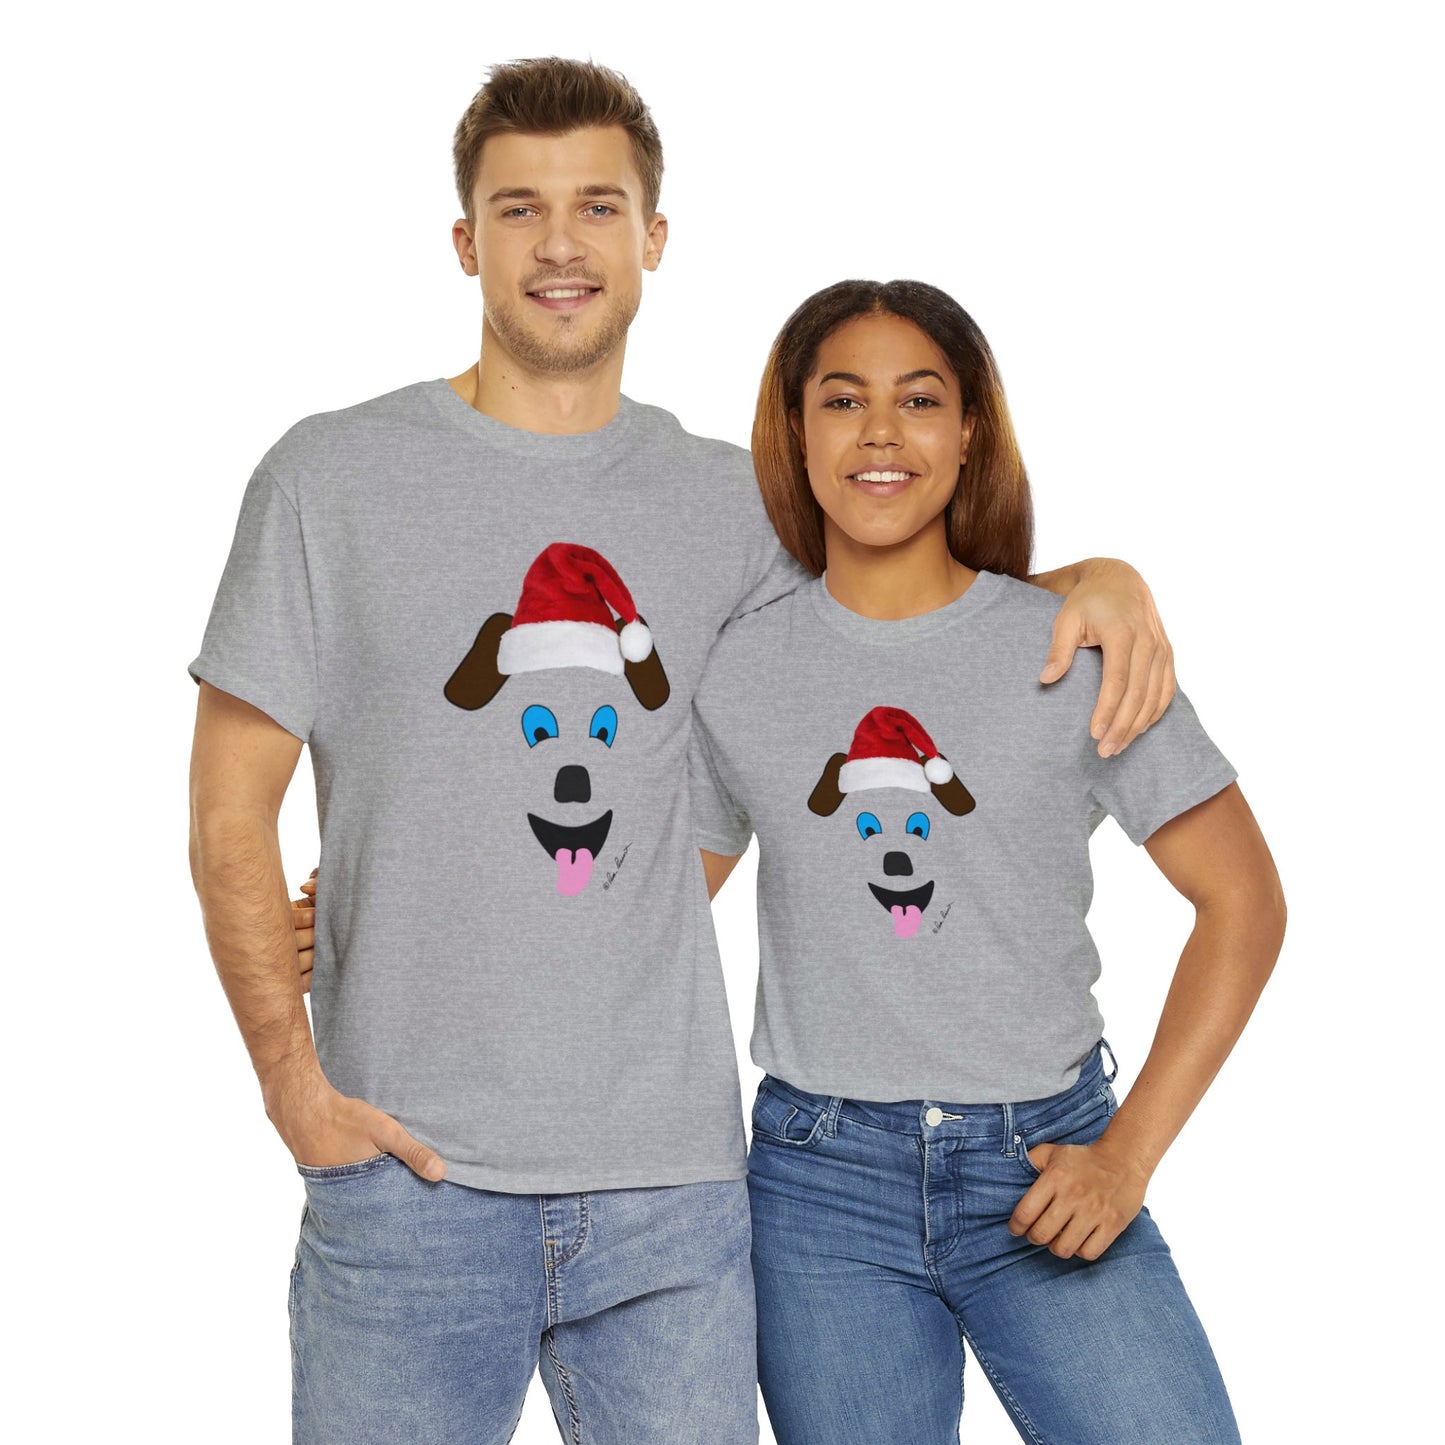 Santa-Dog Unisex T-shirt: 3 colors; Cotton; Gildan brand